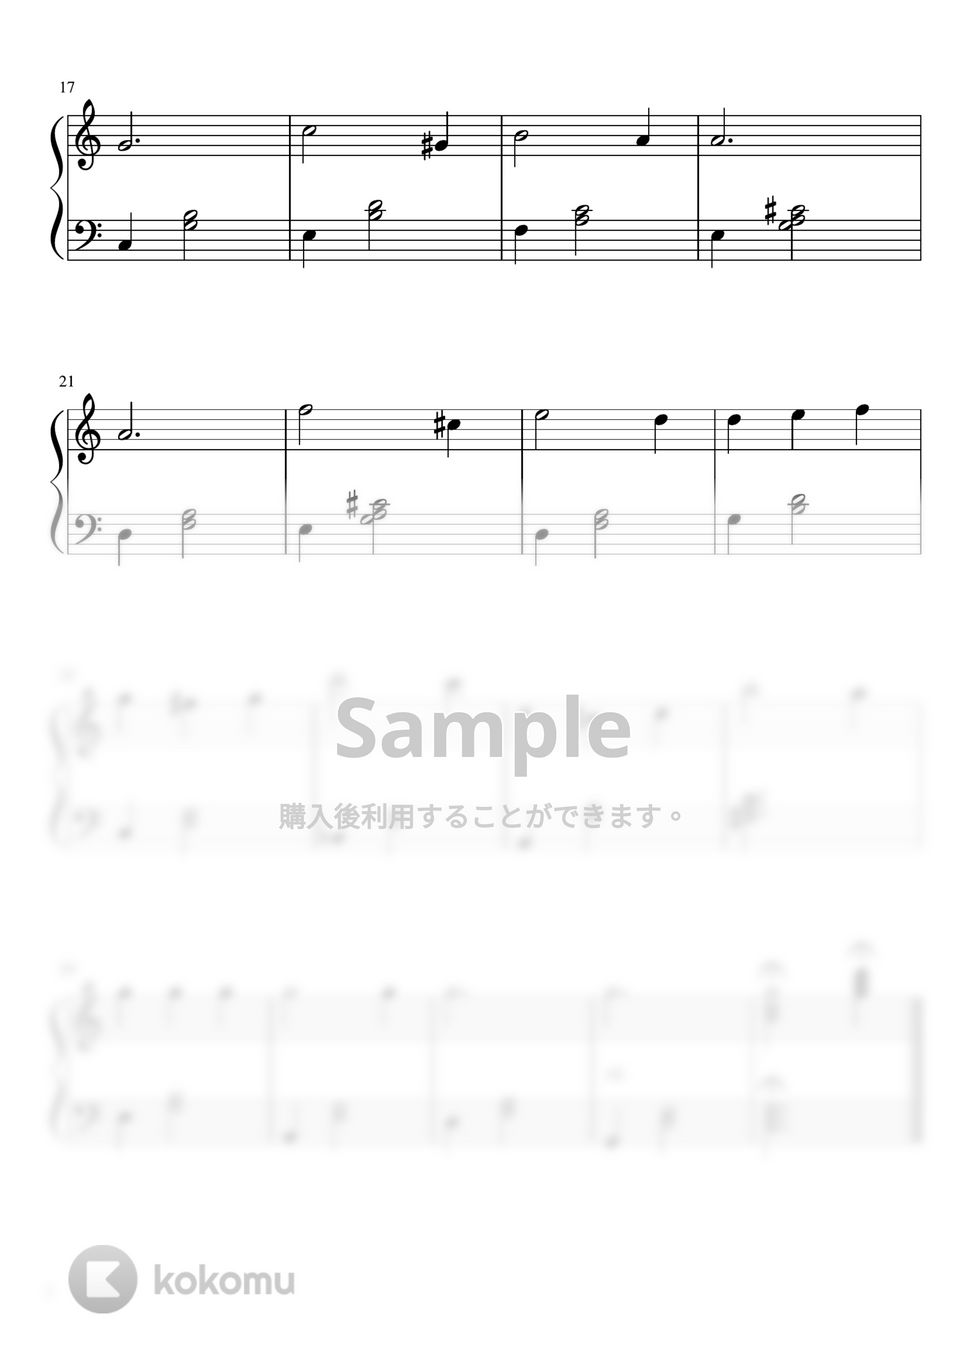 F.チャーチル - いつか王子様が (Cdur/ピアノソロ初〜中級) by pfkaori